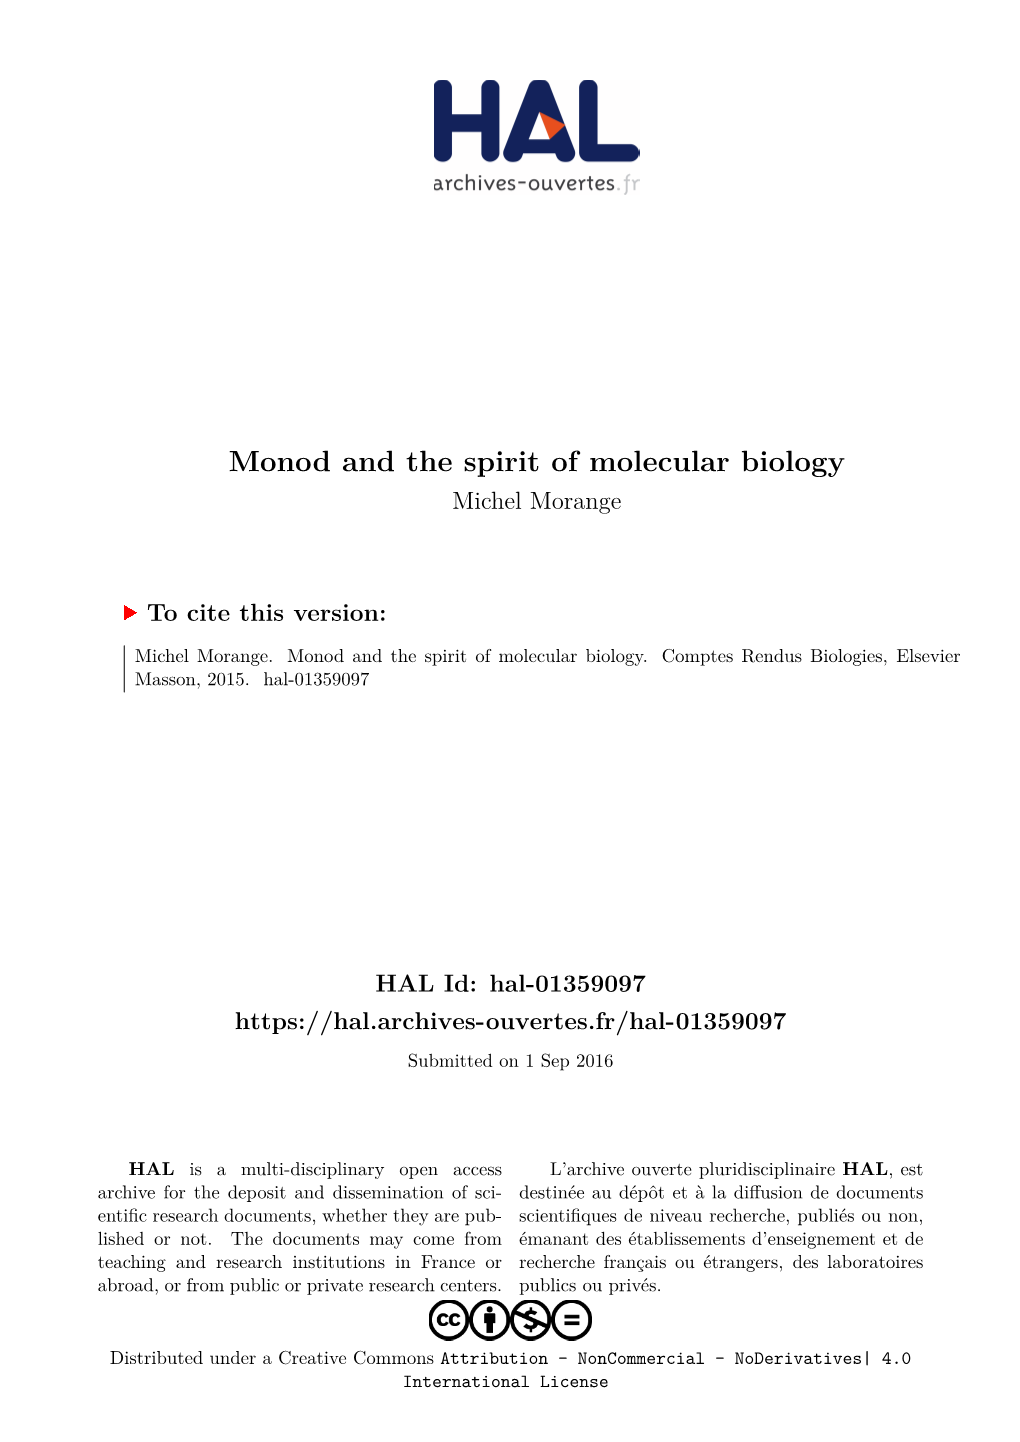 Monod and the Spirit of Molecular Biology Michel Morange